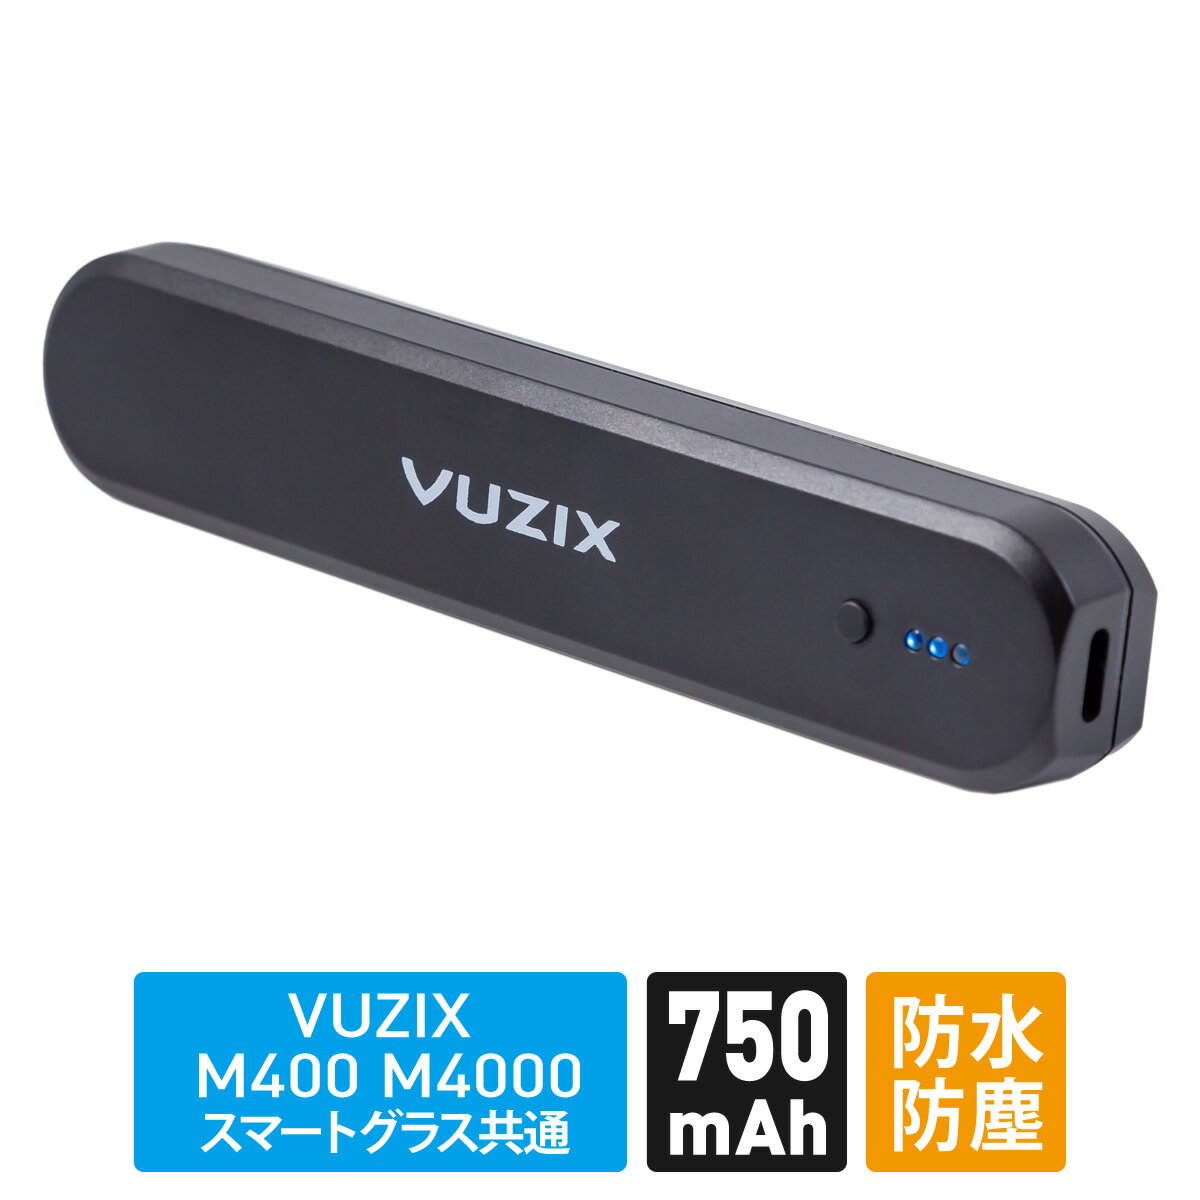 VUZIX M400 M4000 スマートグラス オプション フレーム取り付け用バッテリー On-Frame Battery 予備用 ビュージックス